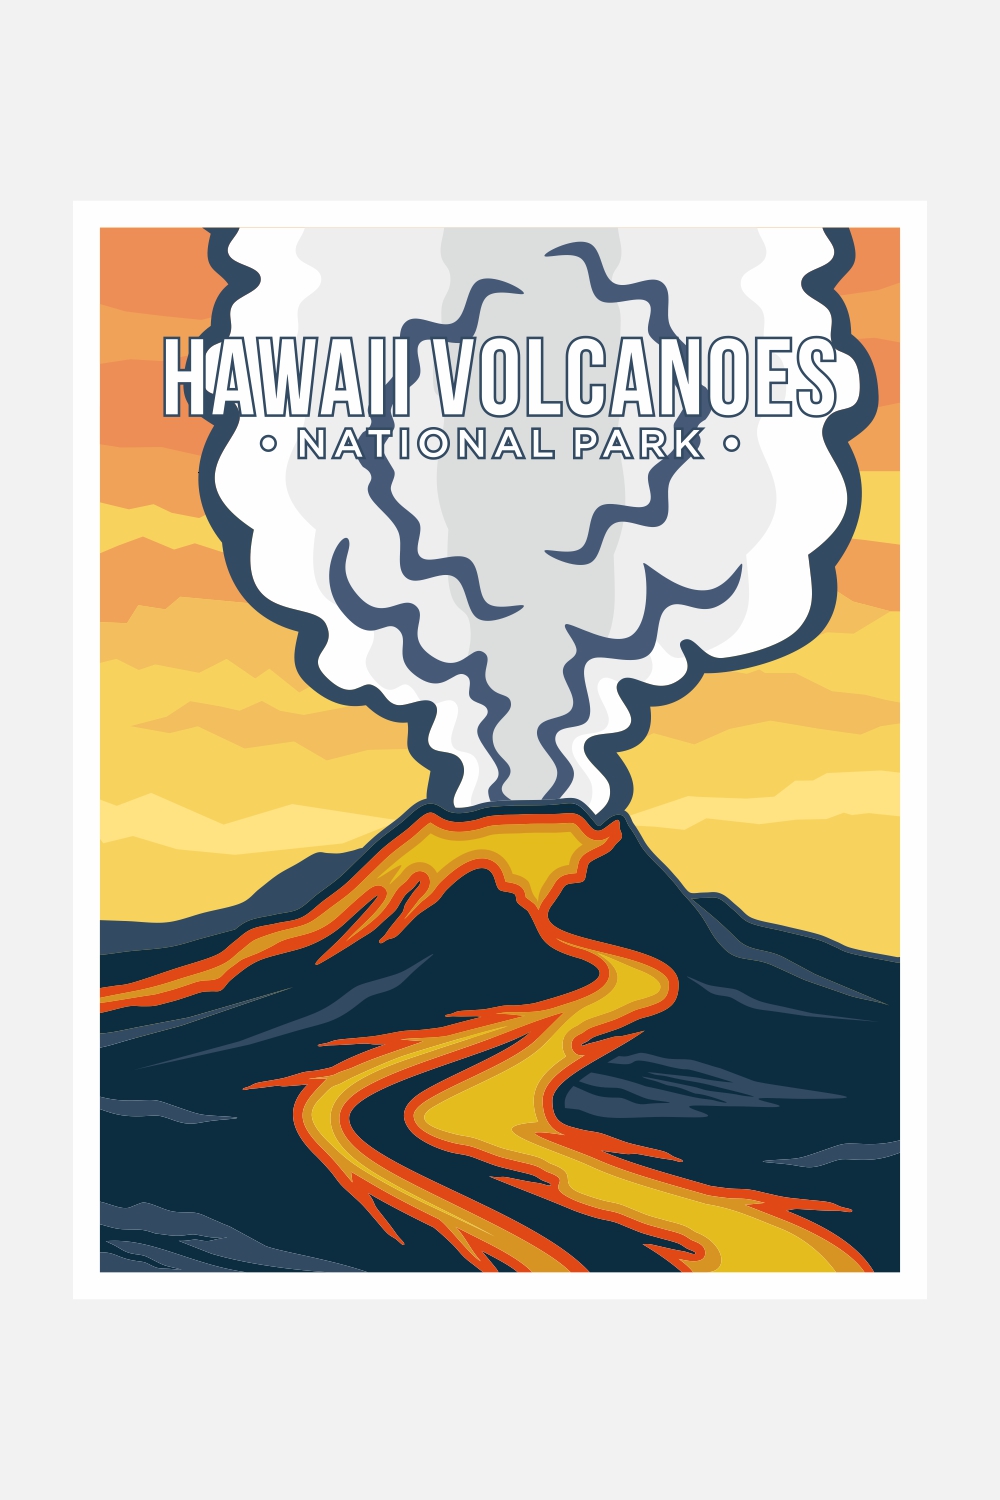 Hawaii Volcano National Park poster vector illustration design – Only $8 pinterest preview image.